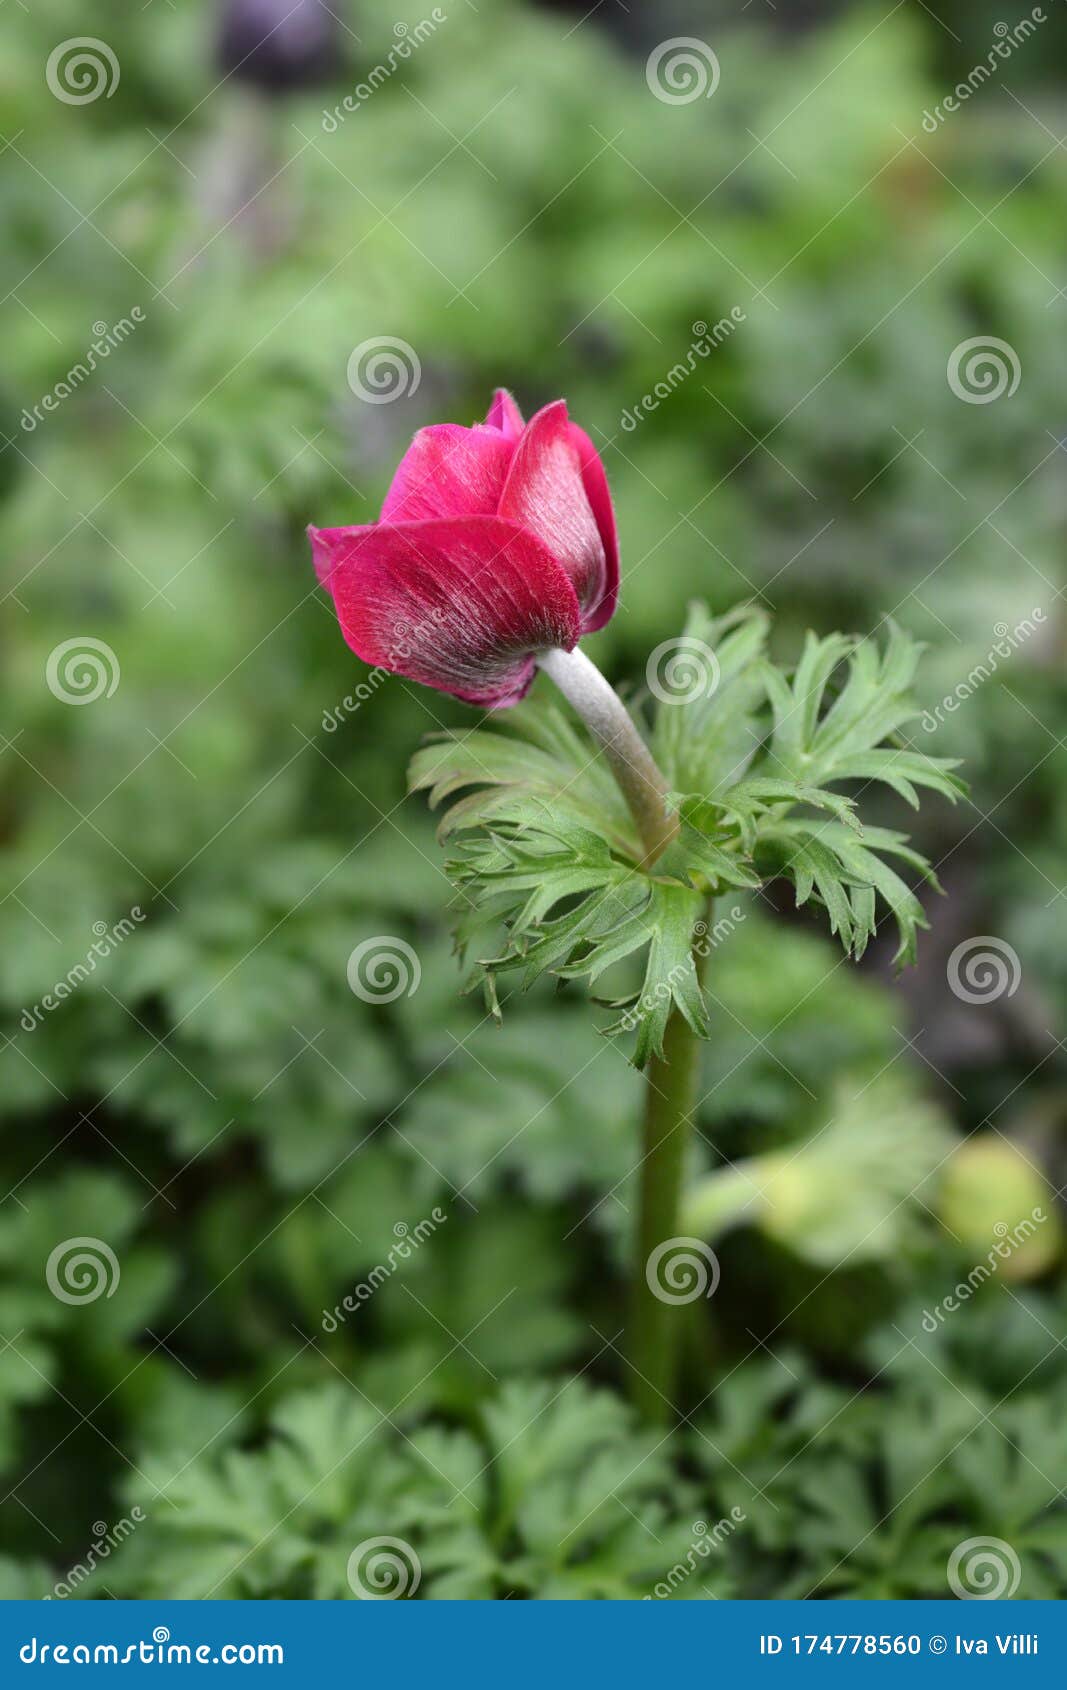 crown anemone animo pink